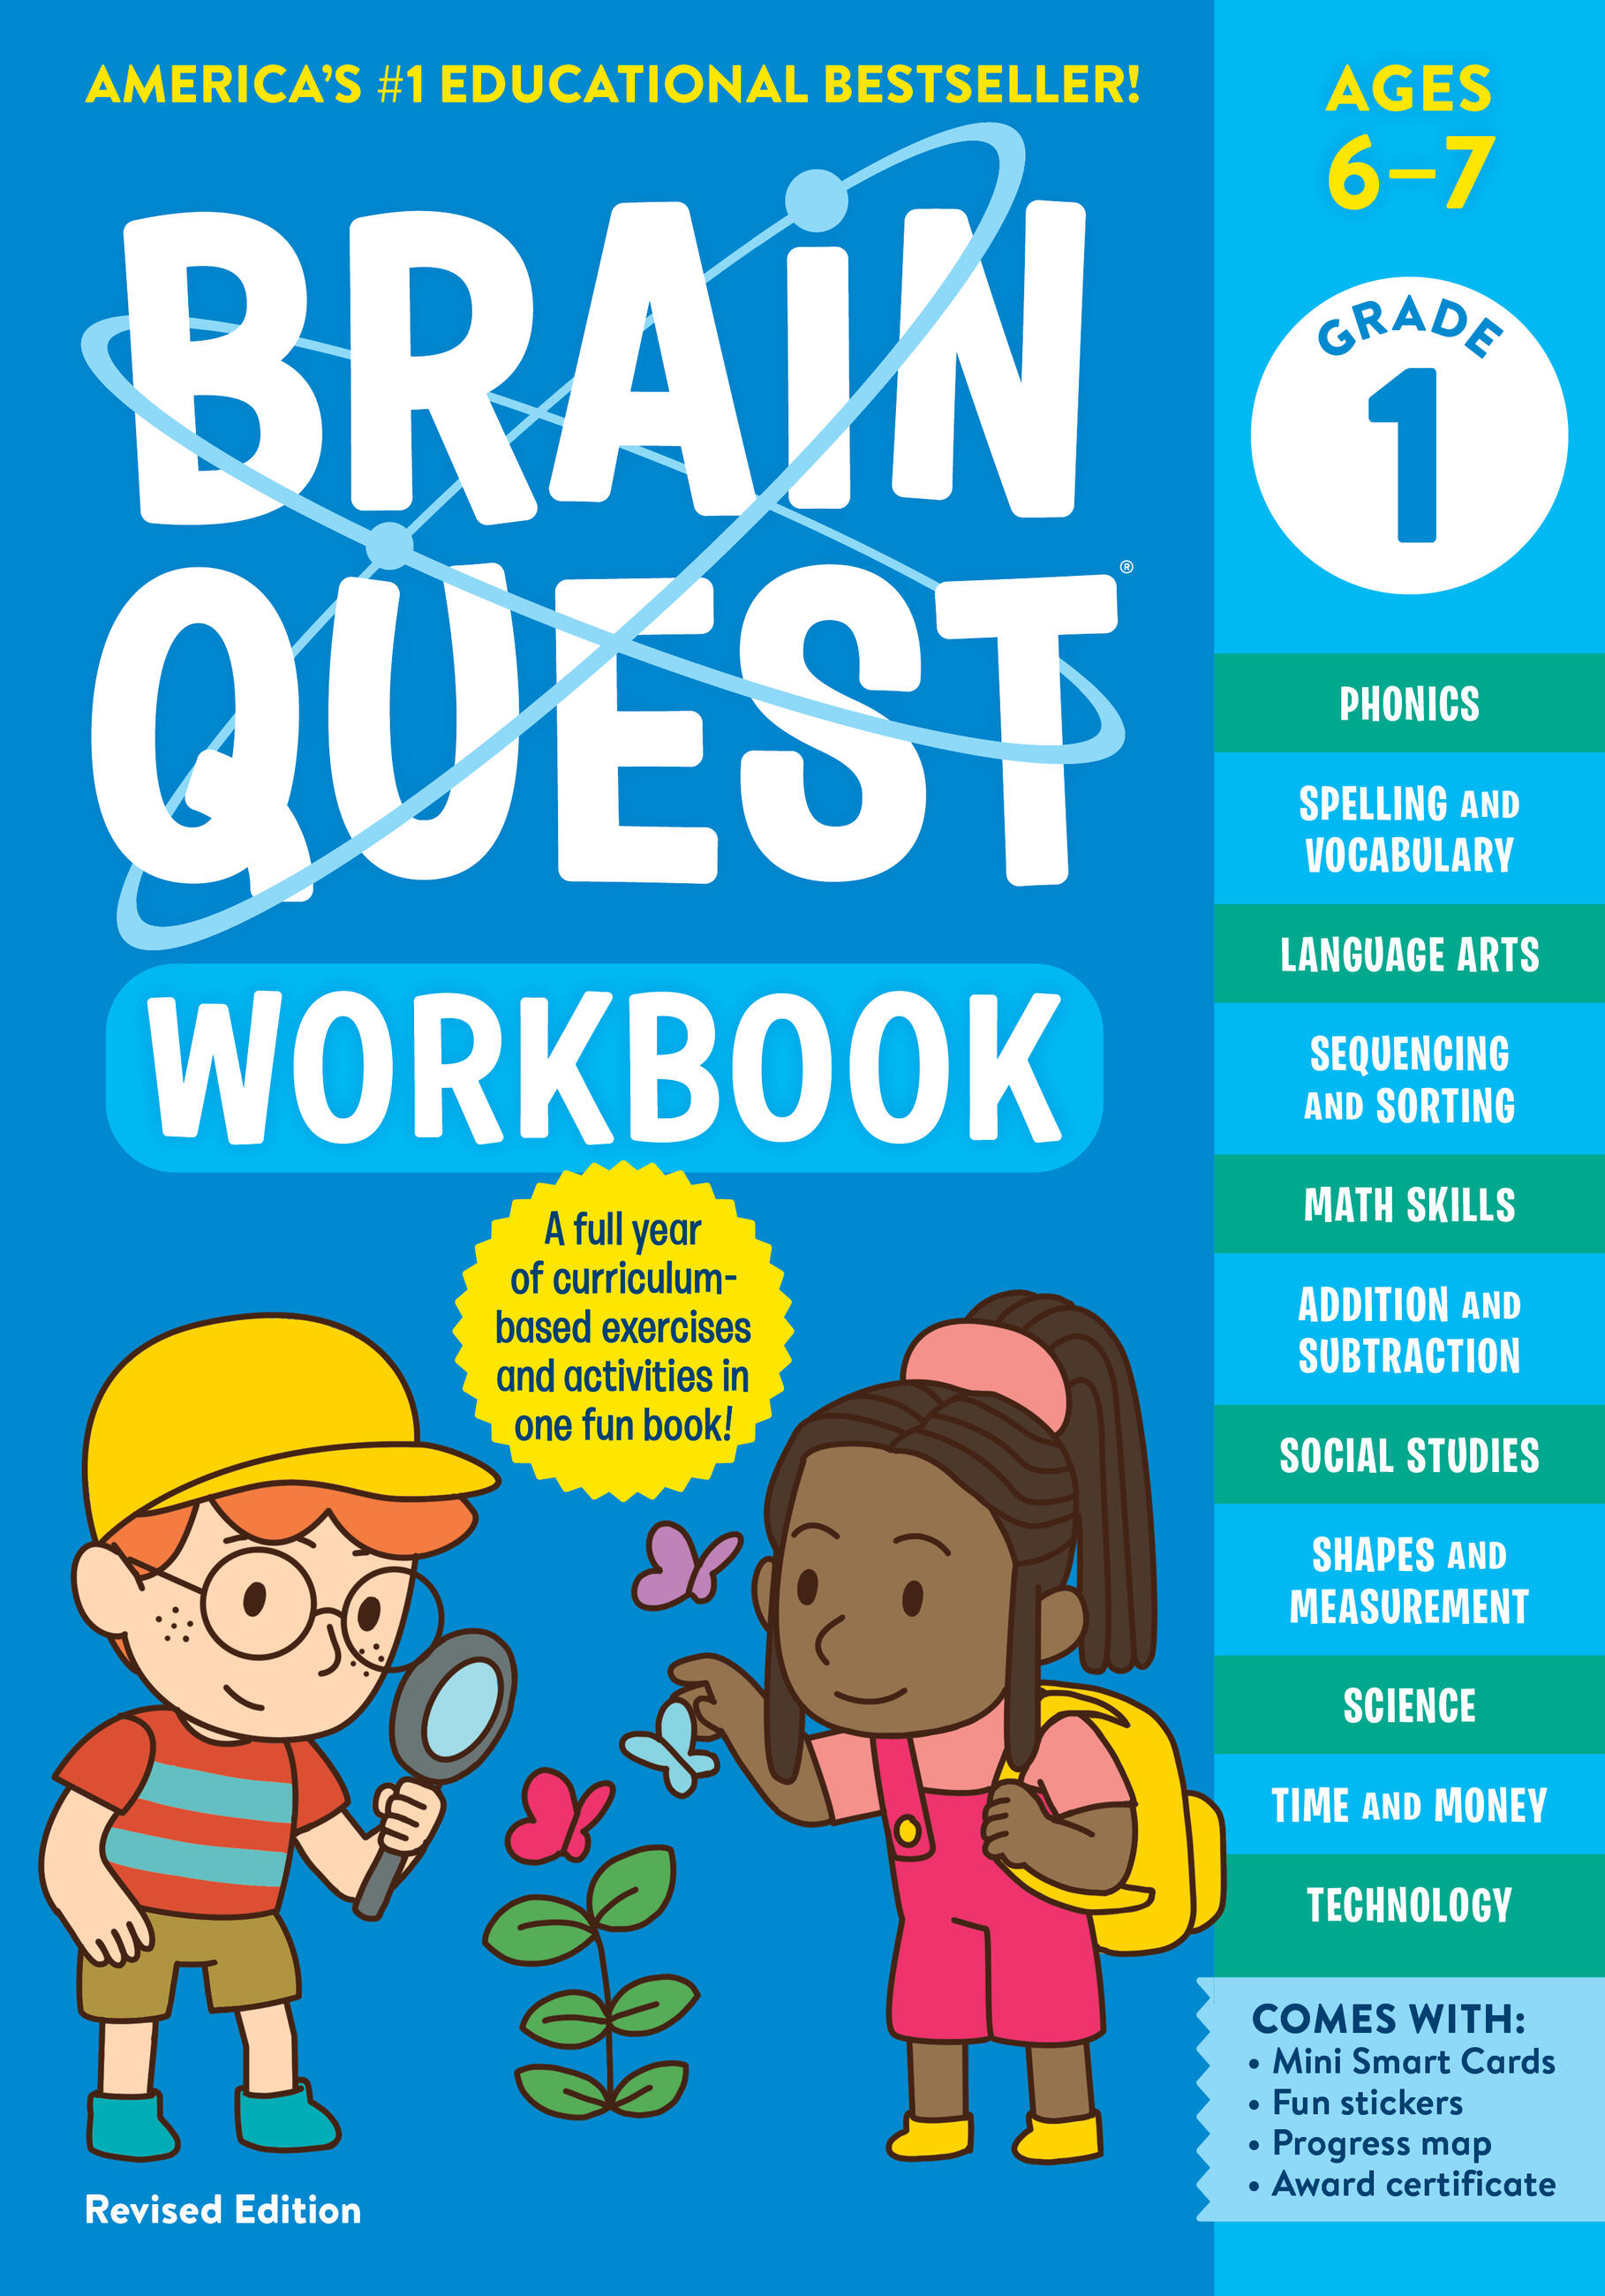 Brain Quest – Home | Hachette Book Group